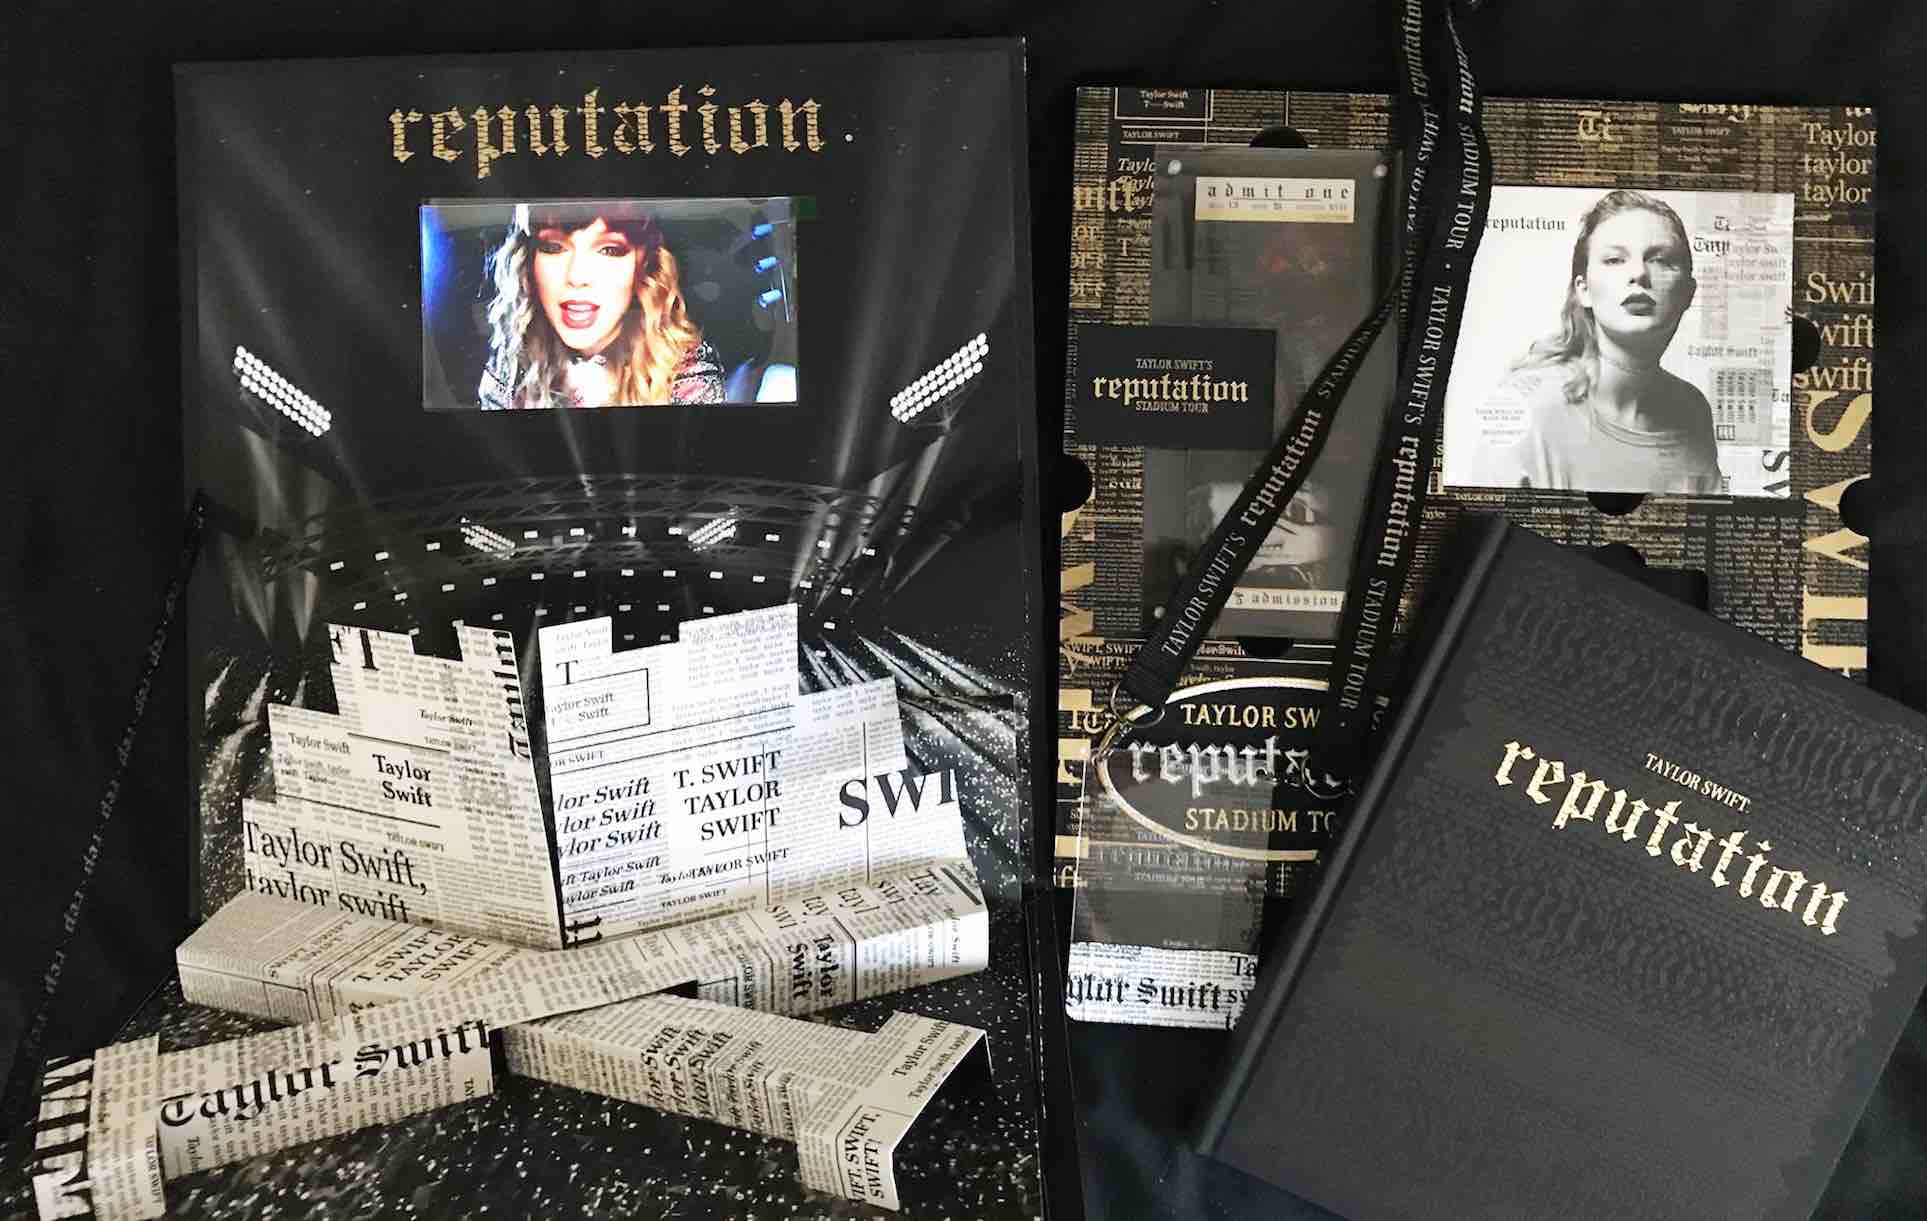 Taylor Swift Reputation tour vip限定グッズ - 音楽